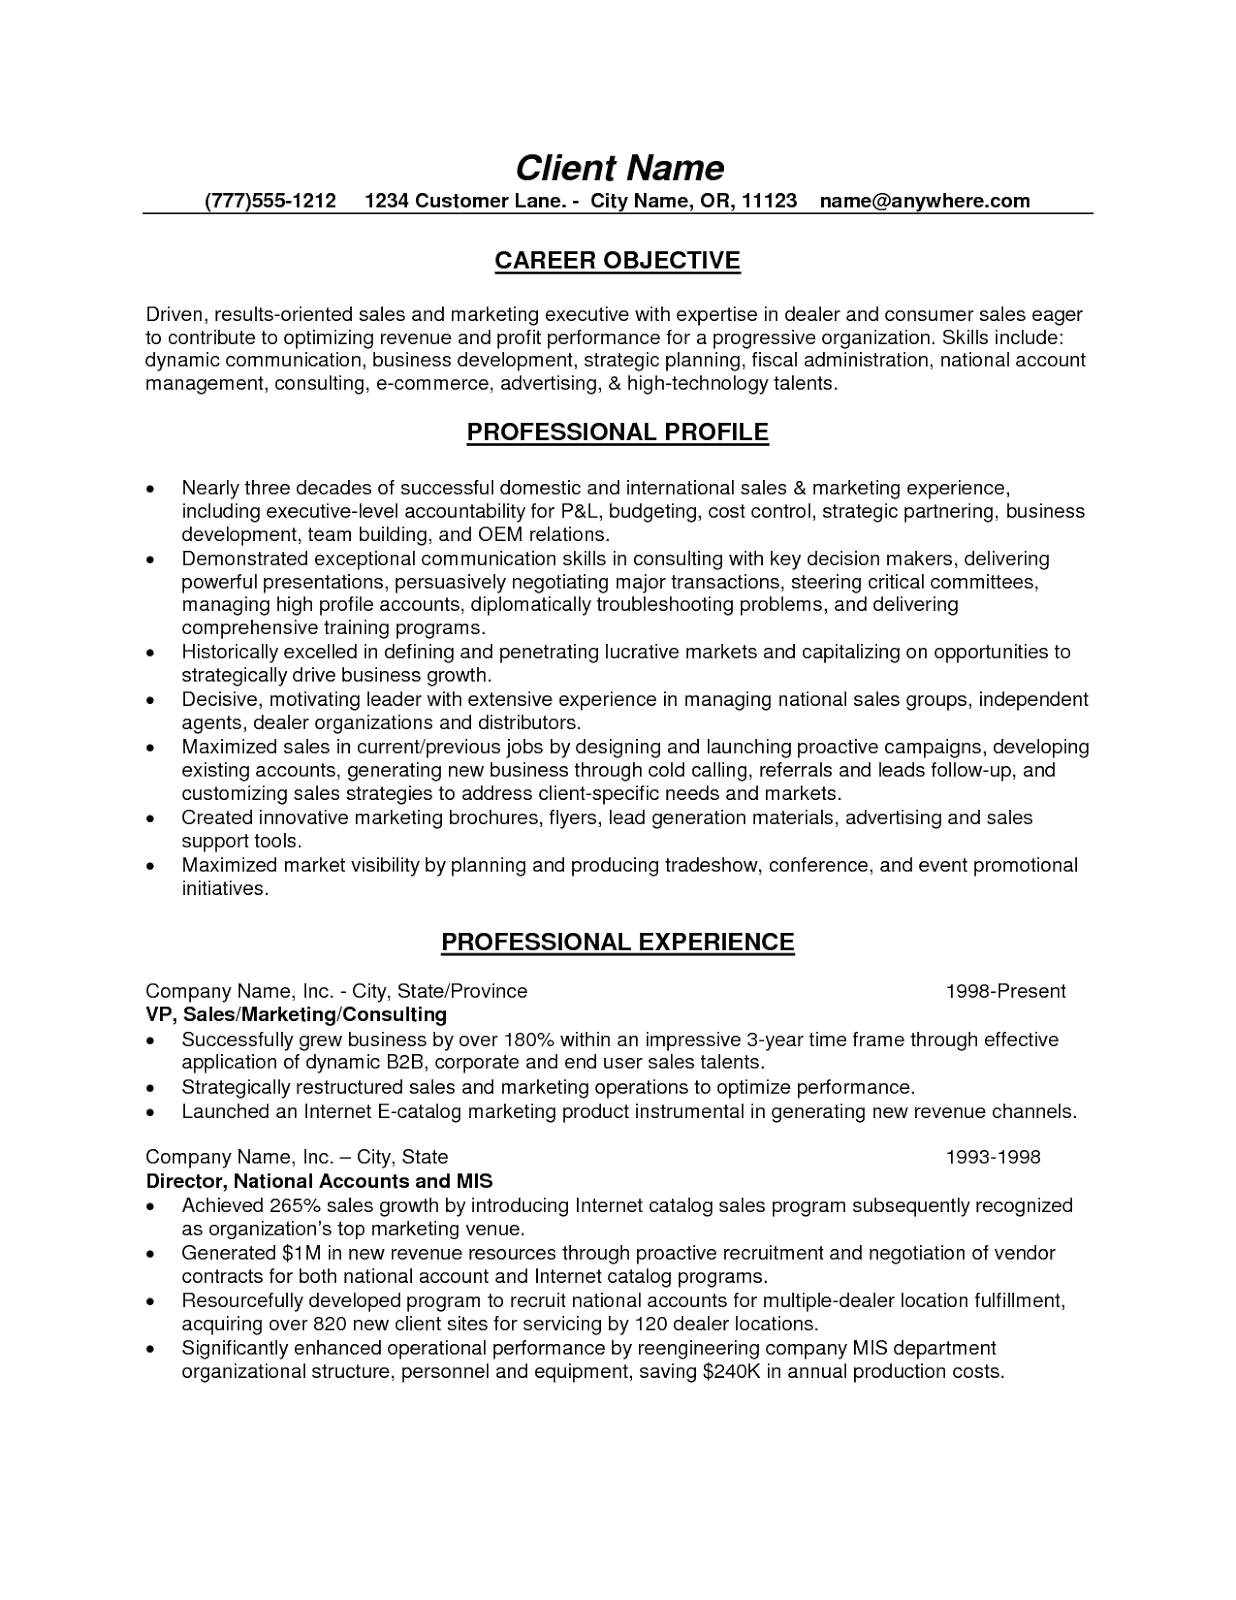 security engineer resume sample lovely examples resumes job resume network security engineer